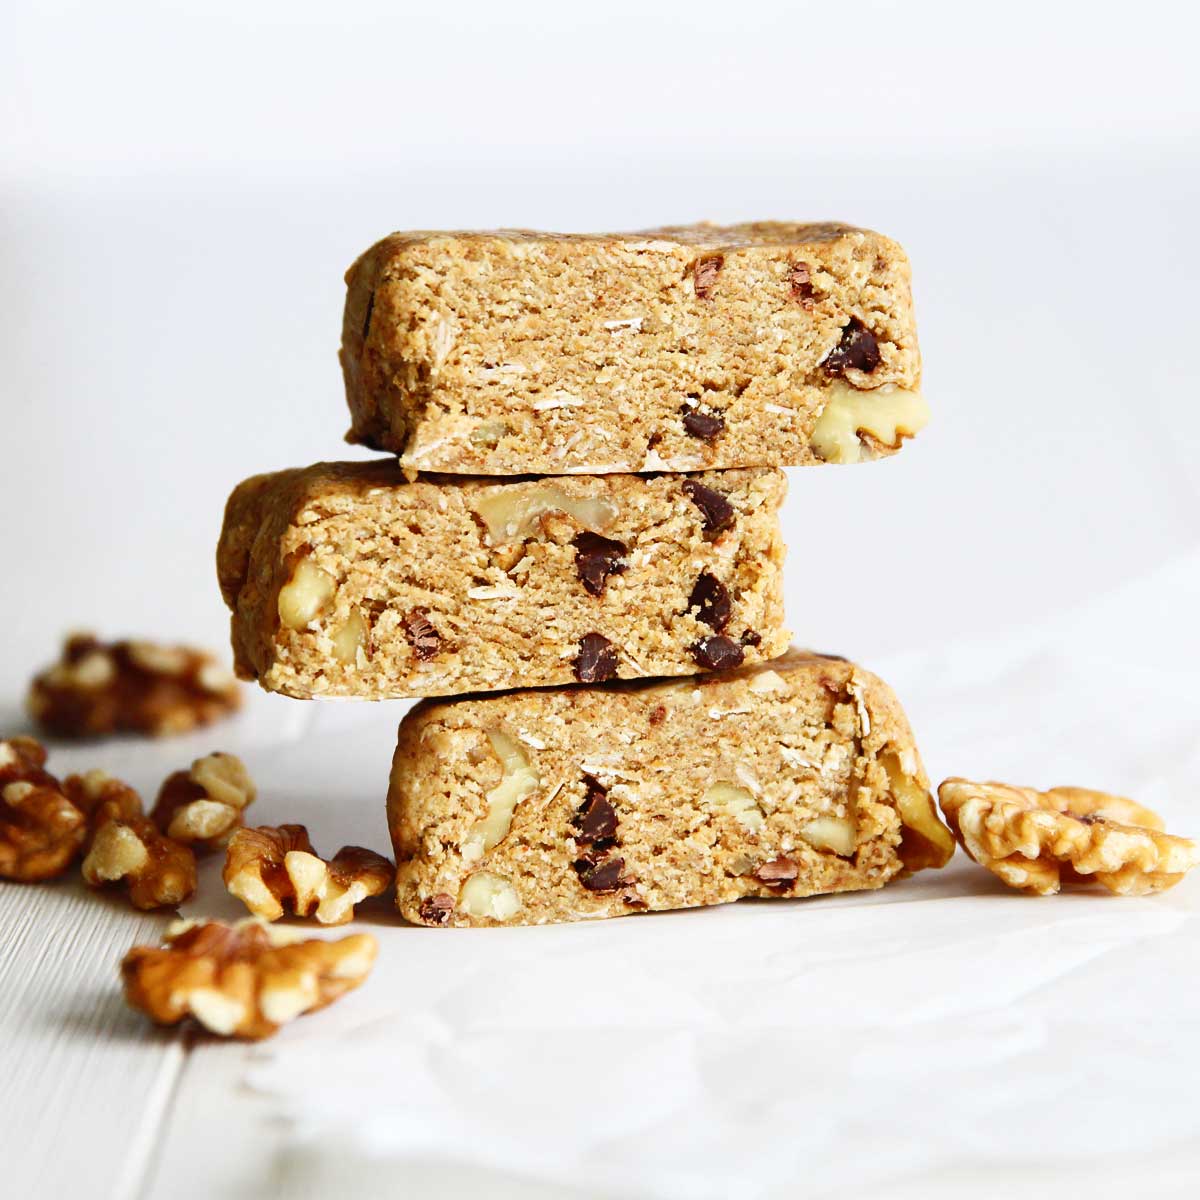 Chocolate Chip Banana Oat Protein Bars (Healthy Vegan Recipe) - Almond Joy Protein Bars